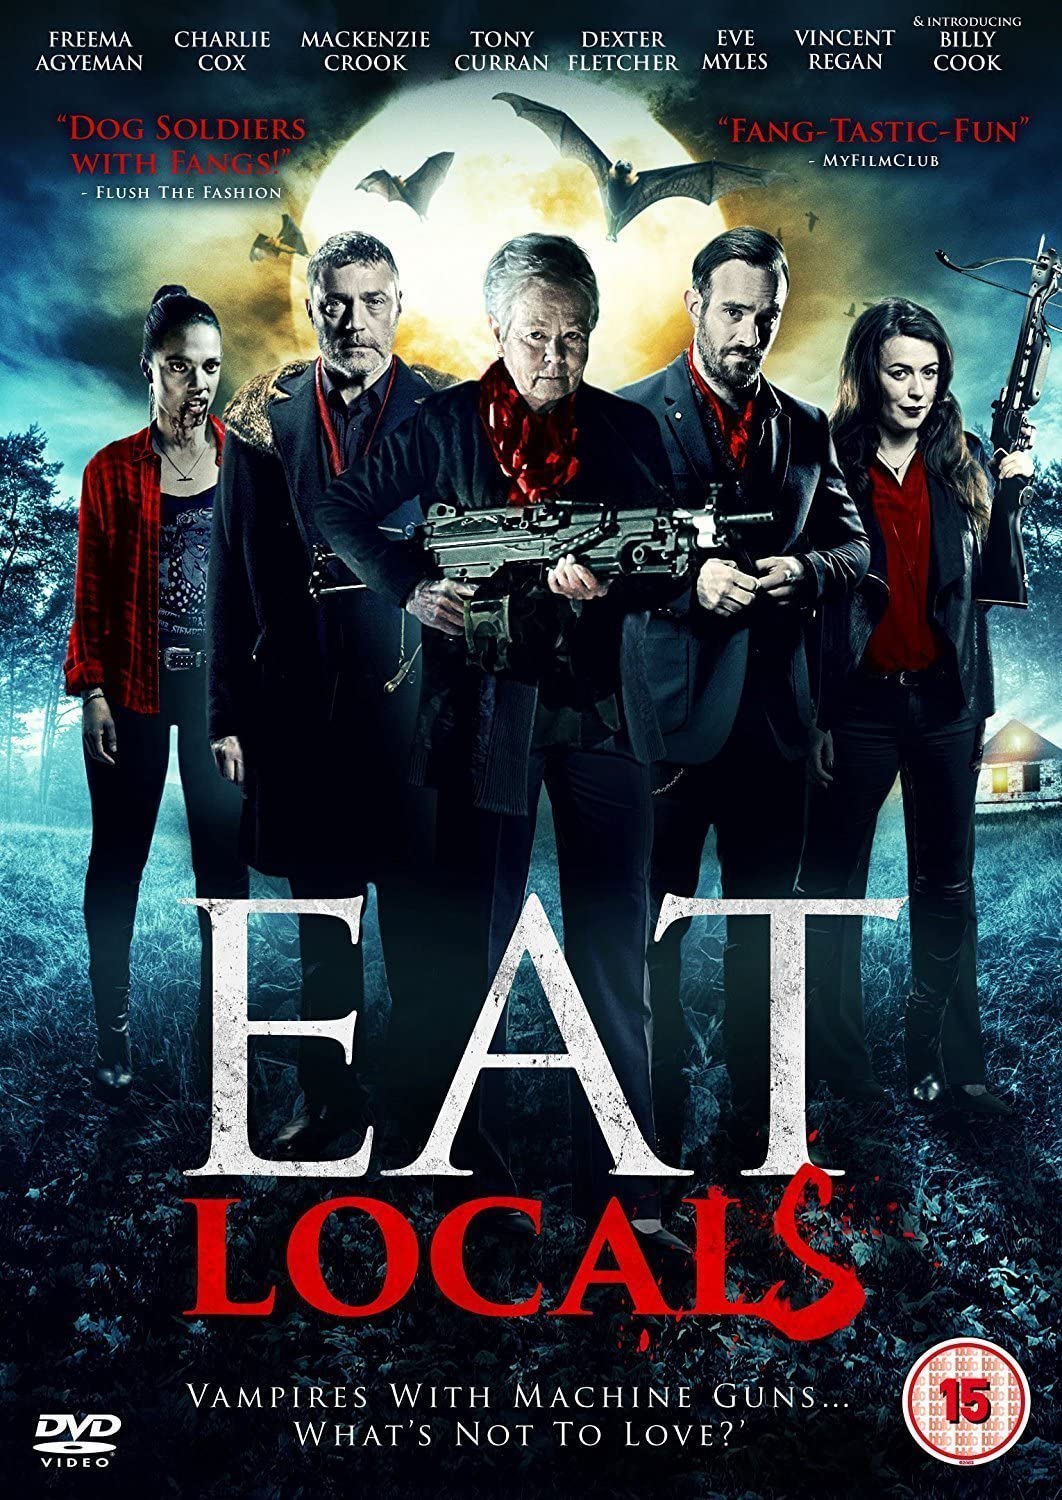 Eat Locals - Horror/Comedy [DVD]